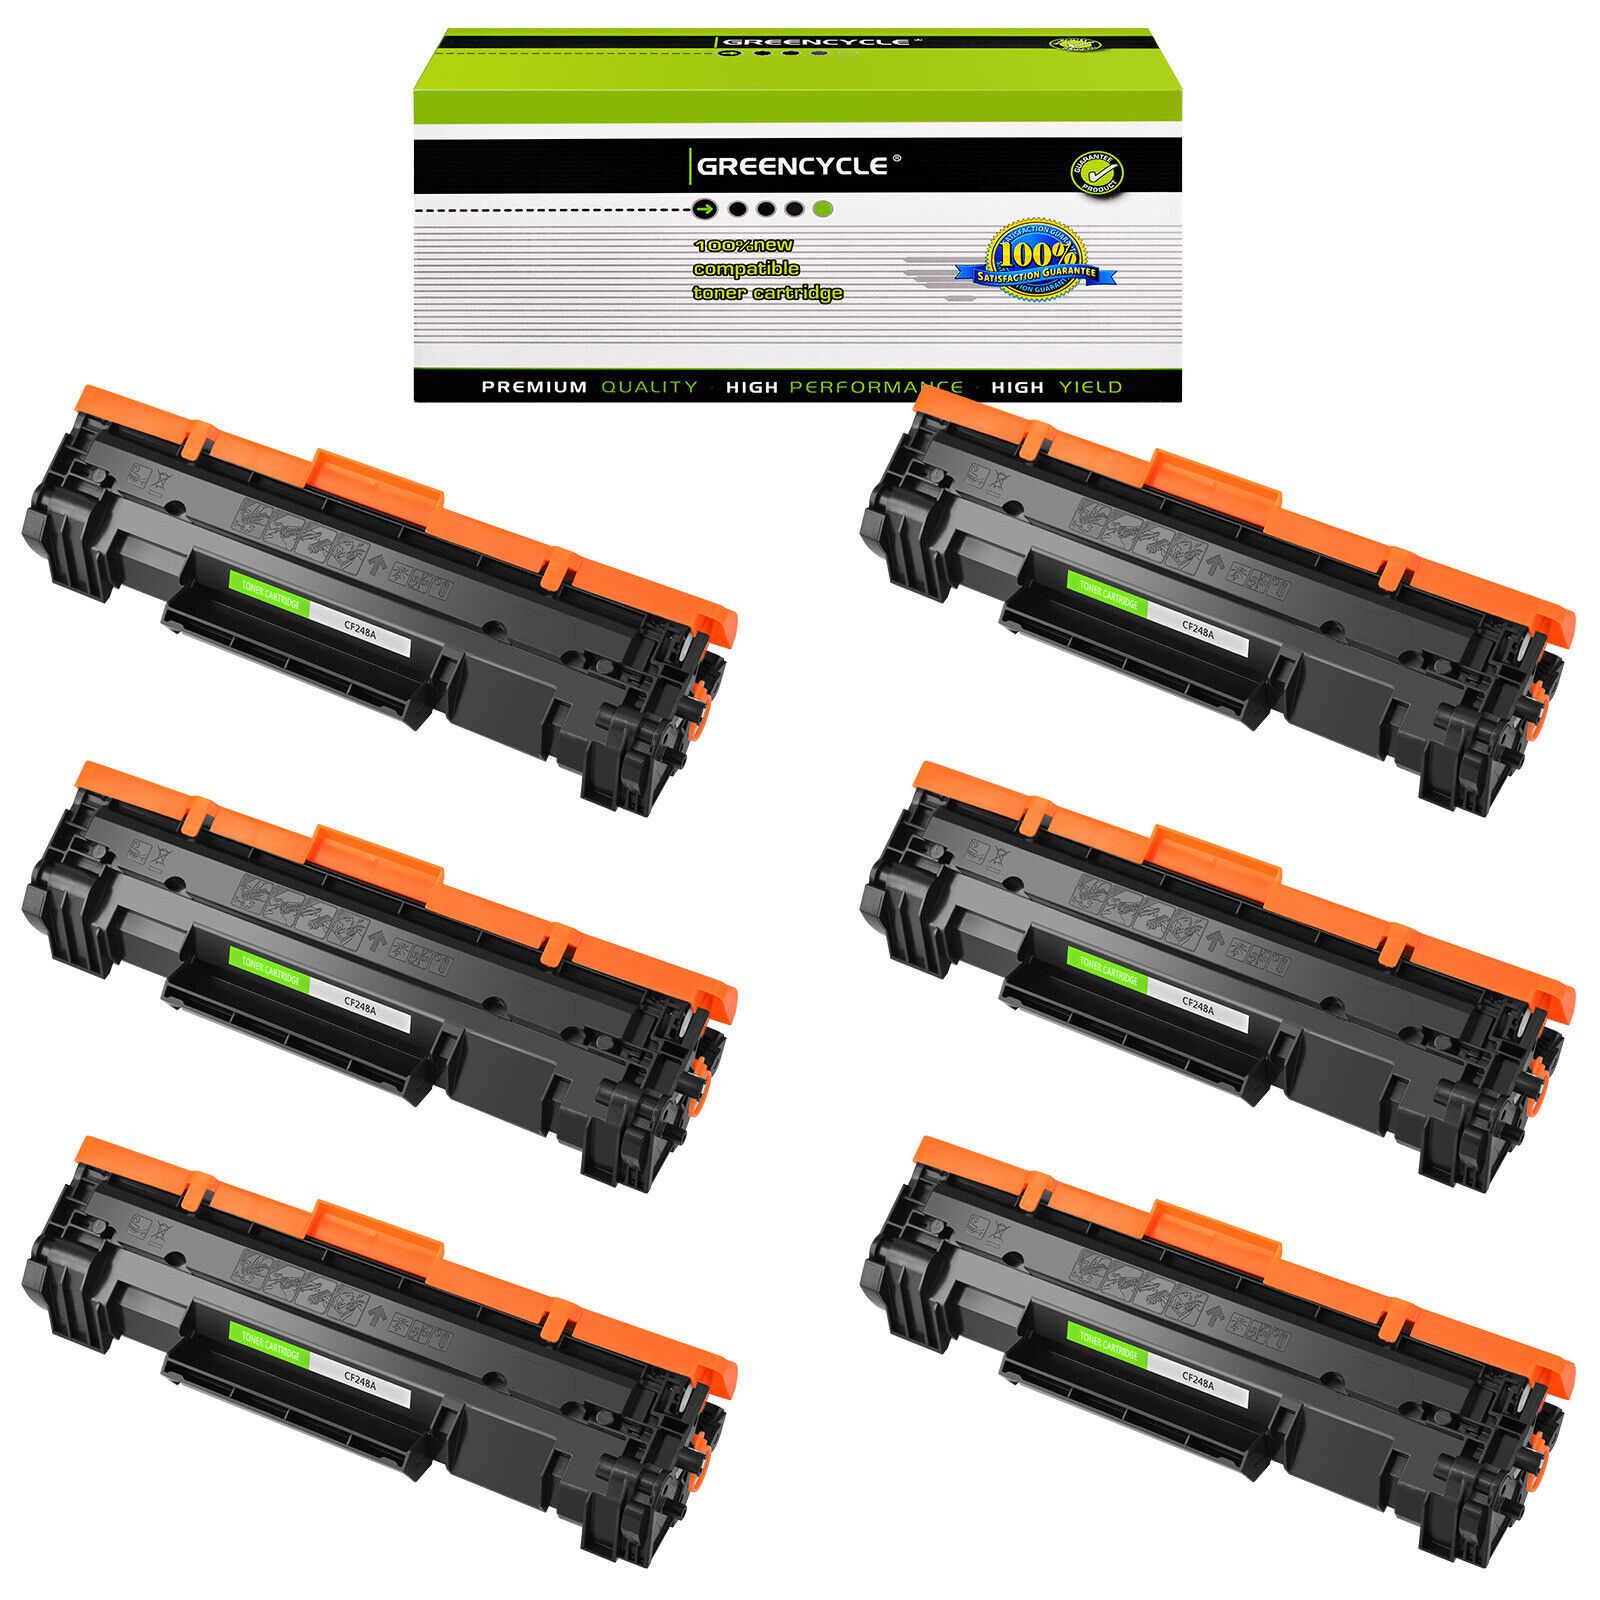 GREENCYCLE 6PK CF248A 48A Toner Cartridge Fits for HP LaserJet Pro Printer Black